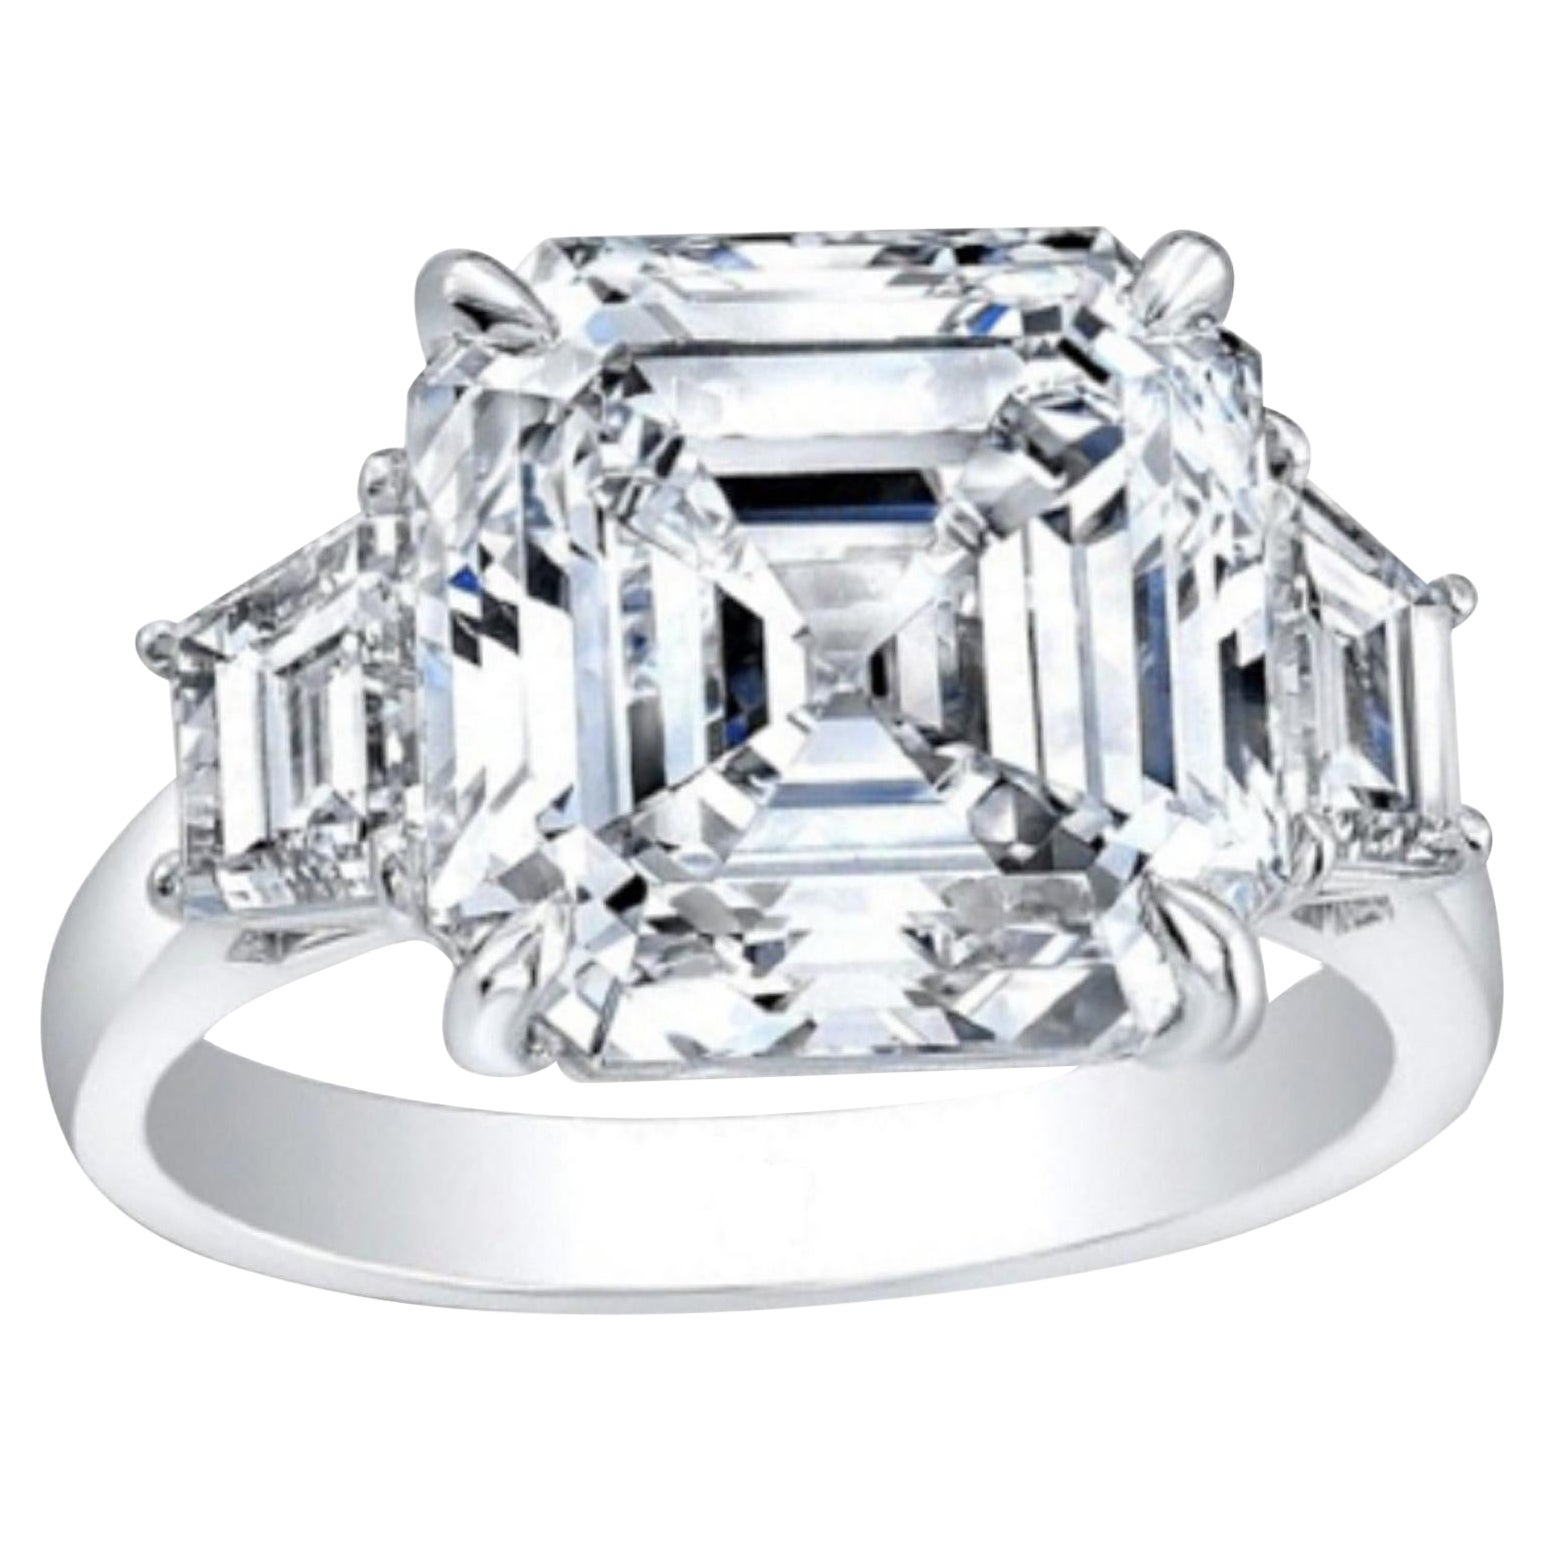 GIA Certified 3 Carat E Color Asscher Cut Diamond 18K Gold Engagement Ring